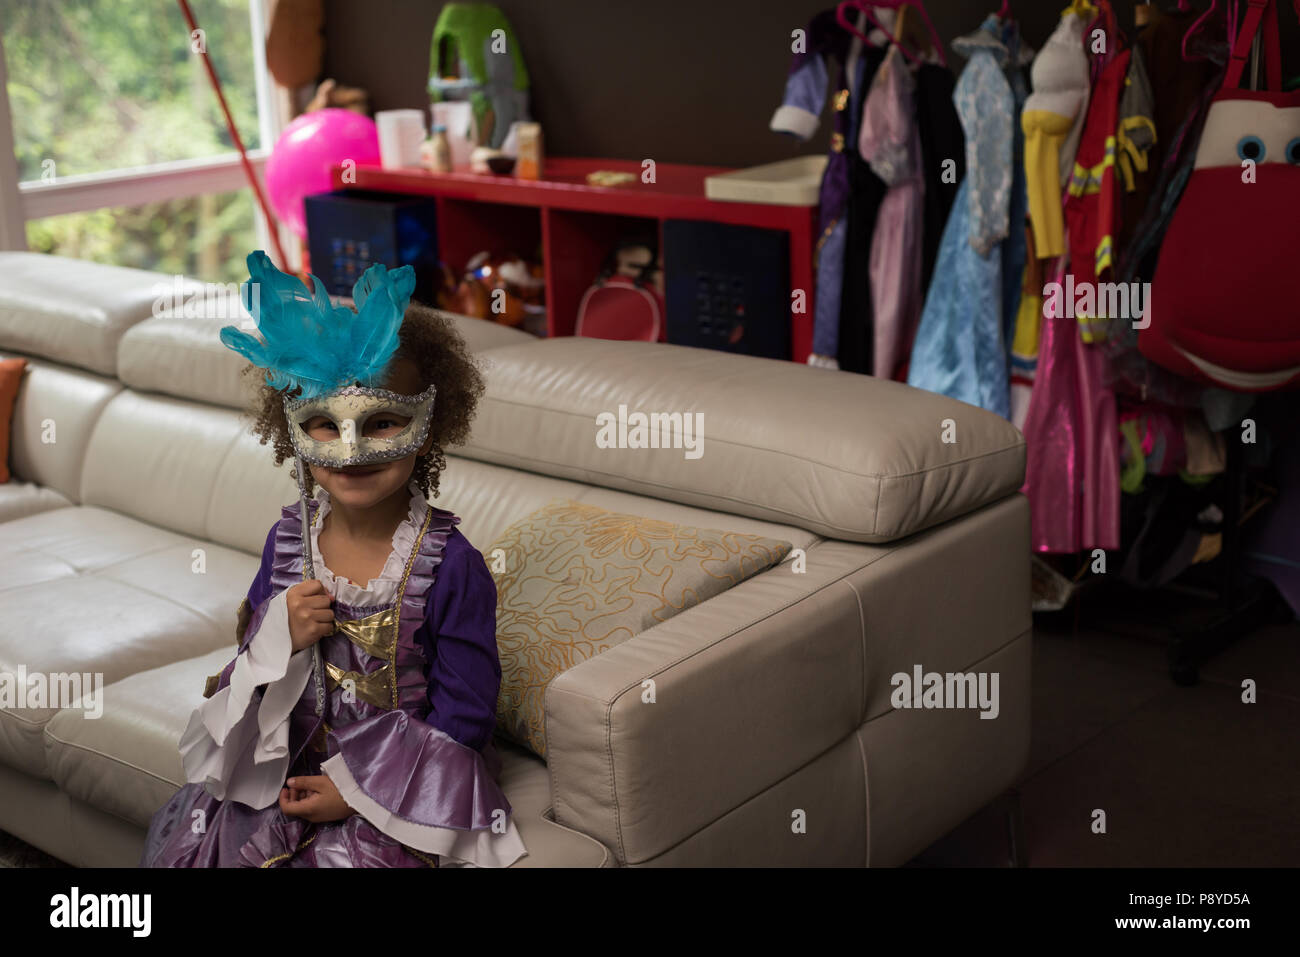 Girl wearing masquerade mask sitting on sofa Stock Photo